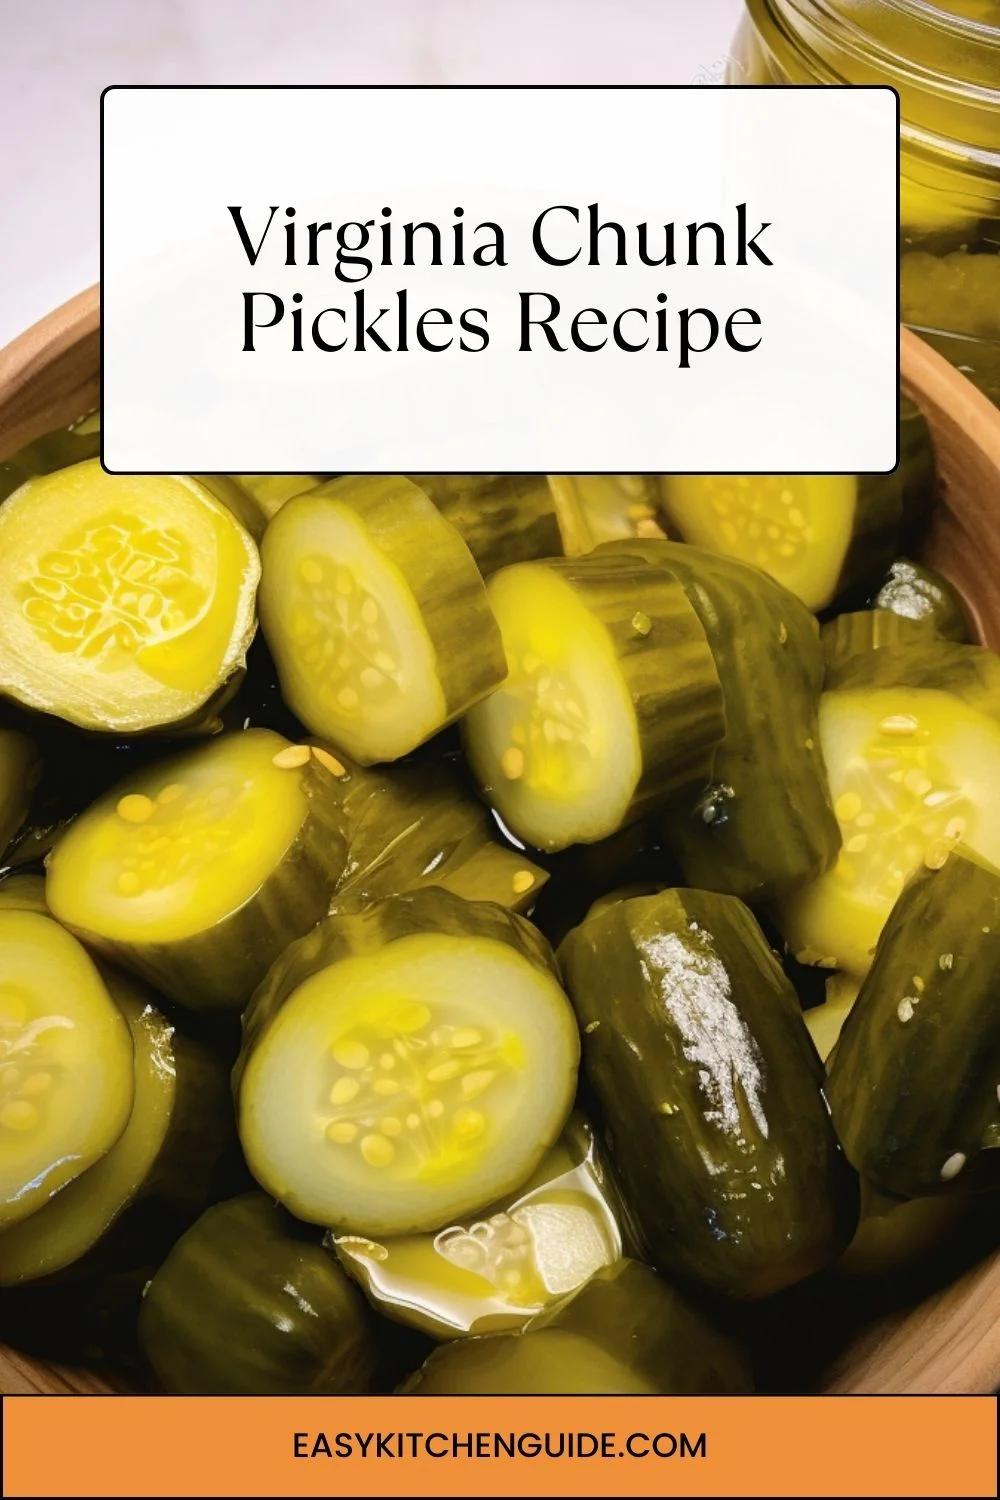 Virginia Chunk Pickles Recipe